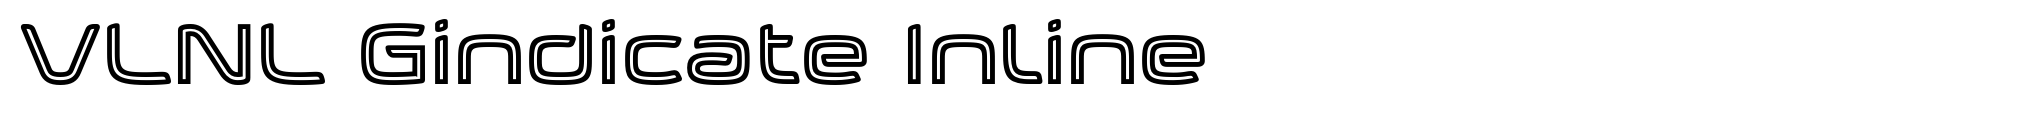 VLNL Gindicate Inline image